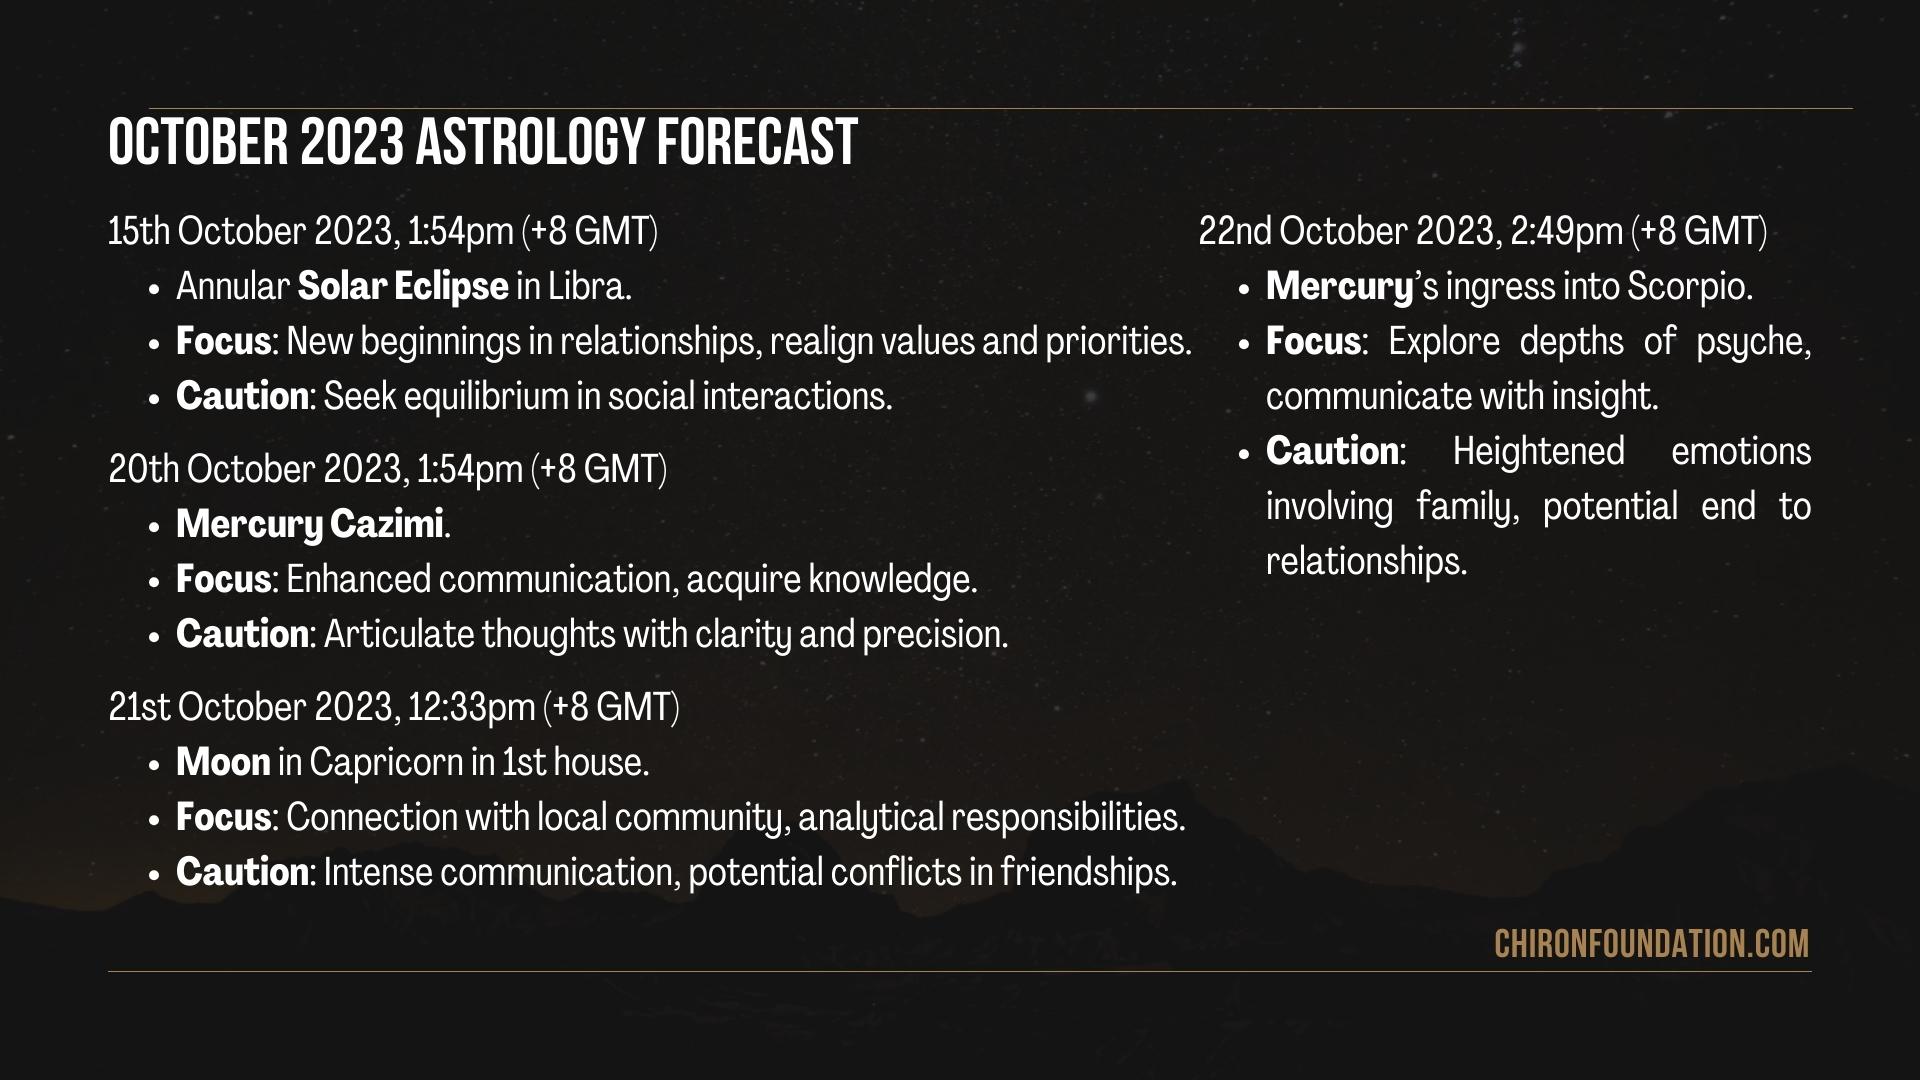 October 2023 Astrology Forecast in Summary 3